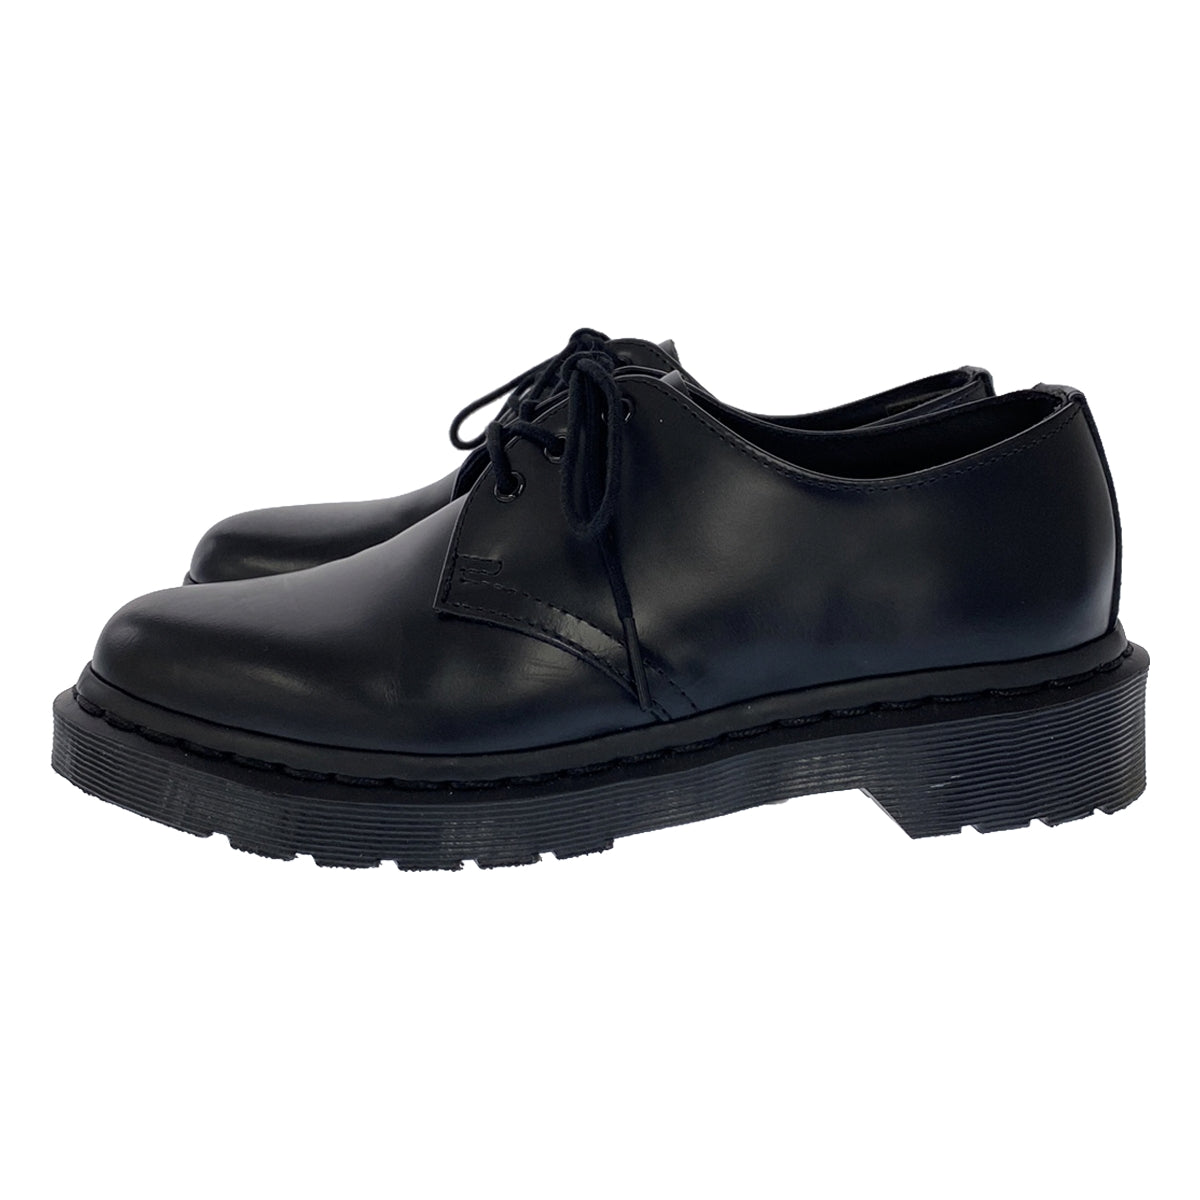 Dr.Martens / ドクターマーチン | 1461 MONO 3 EYELET SHOE / レースアップ レザーシューズ 革靴 | UK3 | レディース